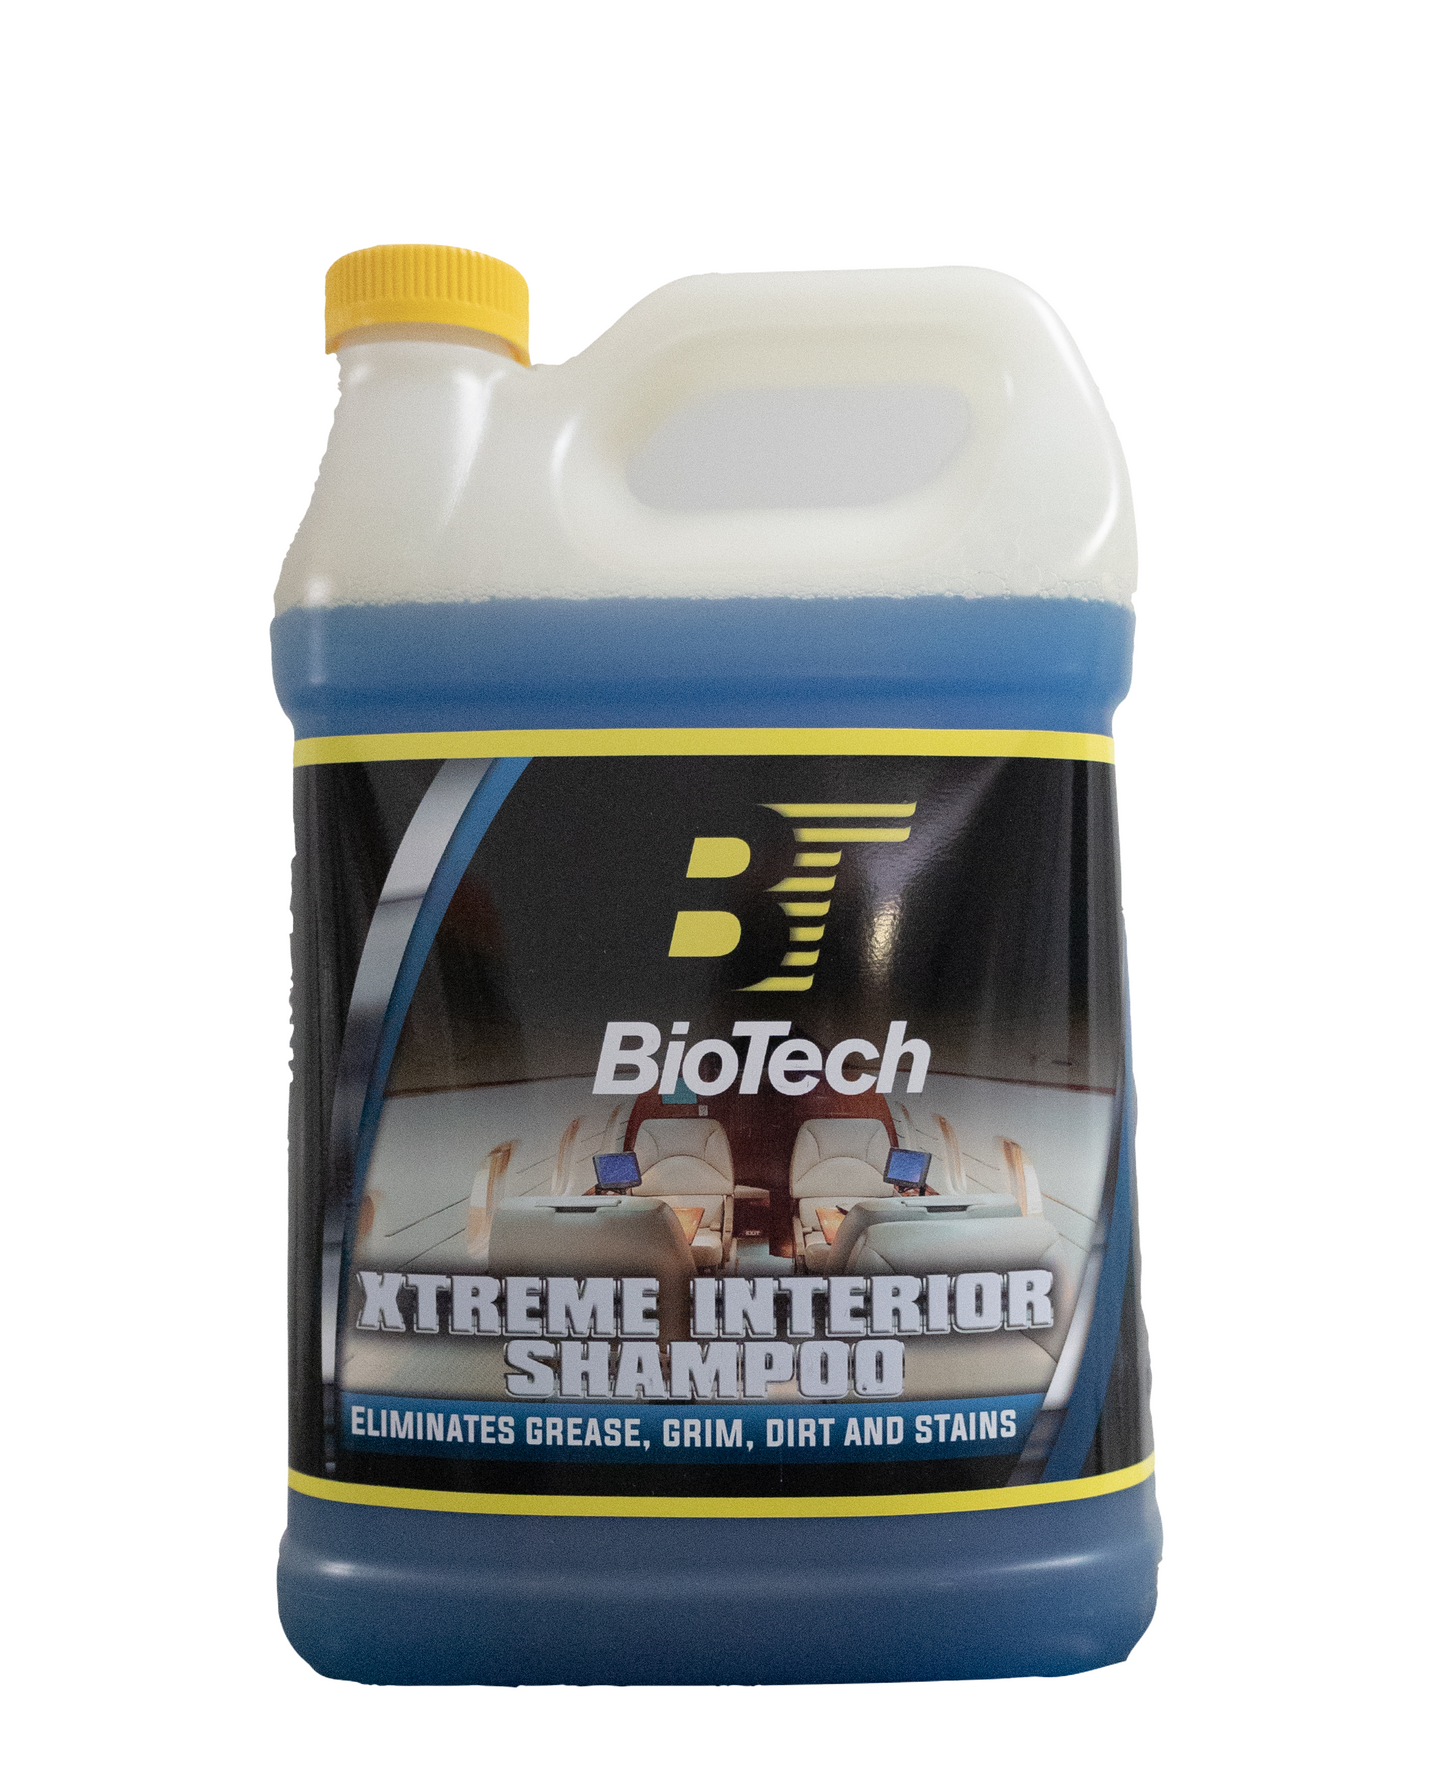 BioTech Xtreme Interior Shampoo